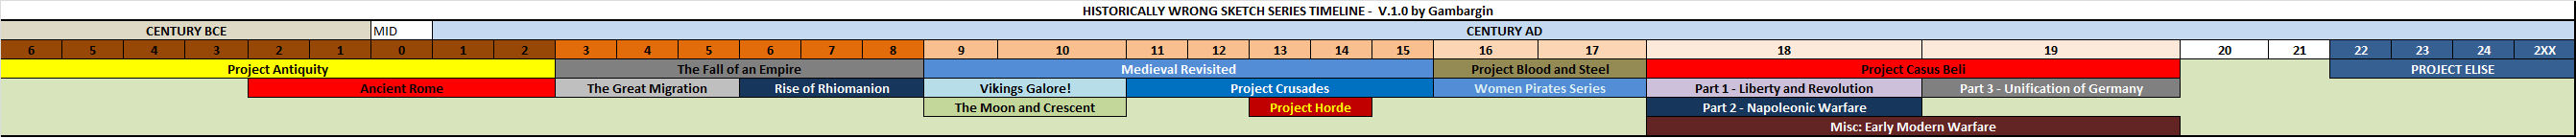 Historically Wrong Sketch Series Timeline  v.1.0